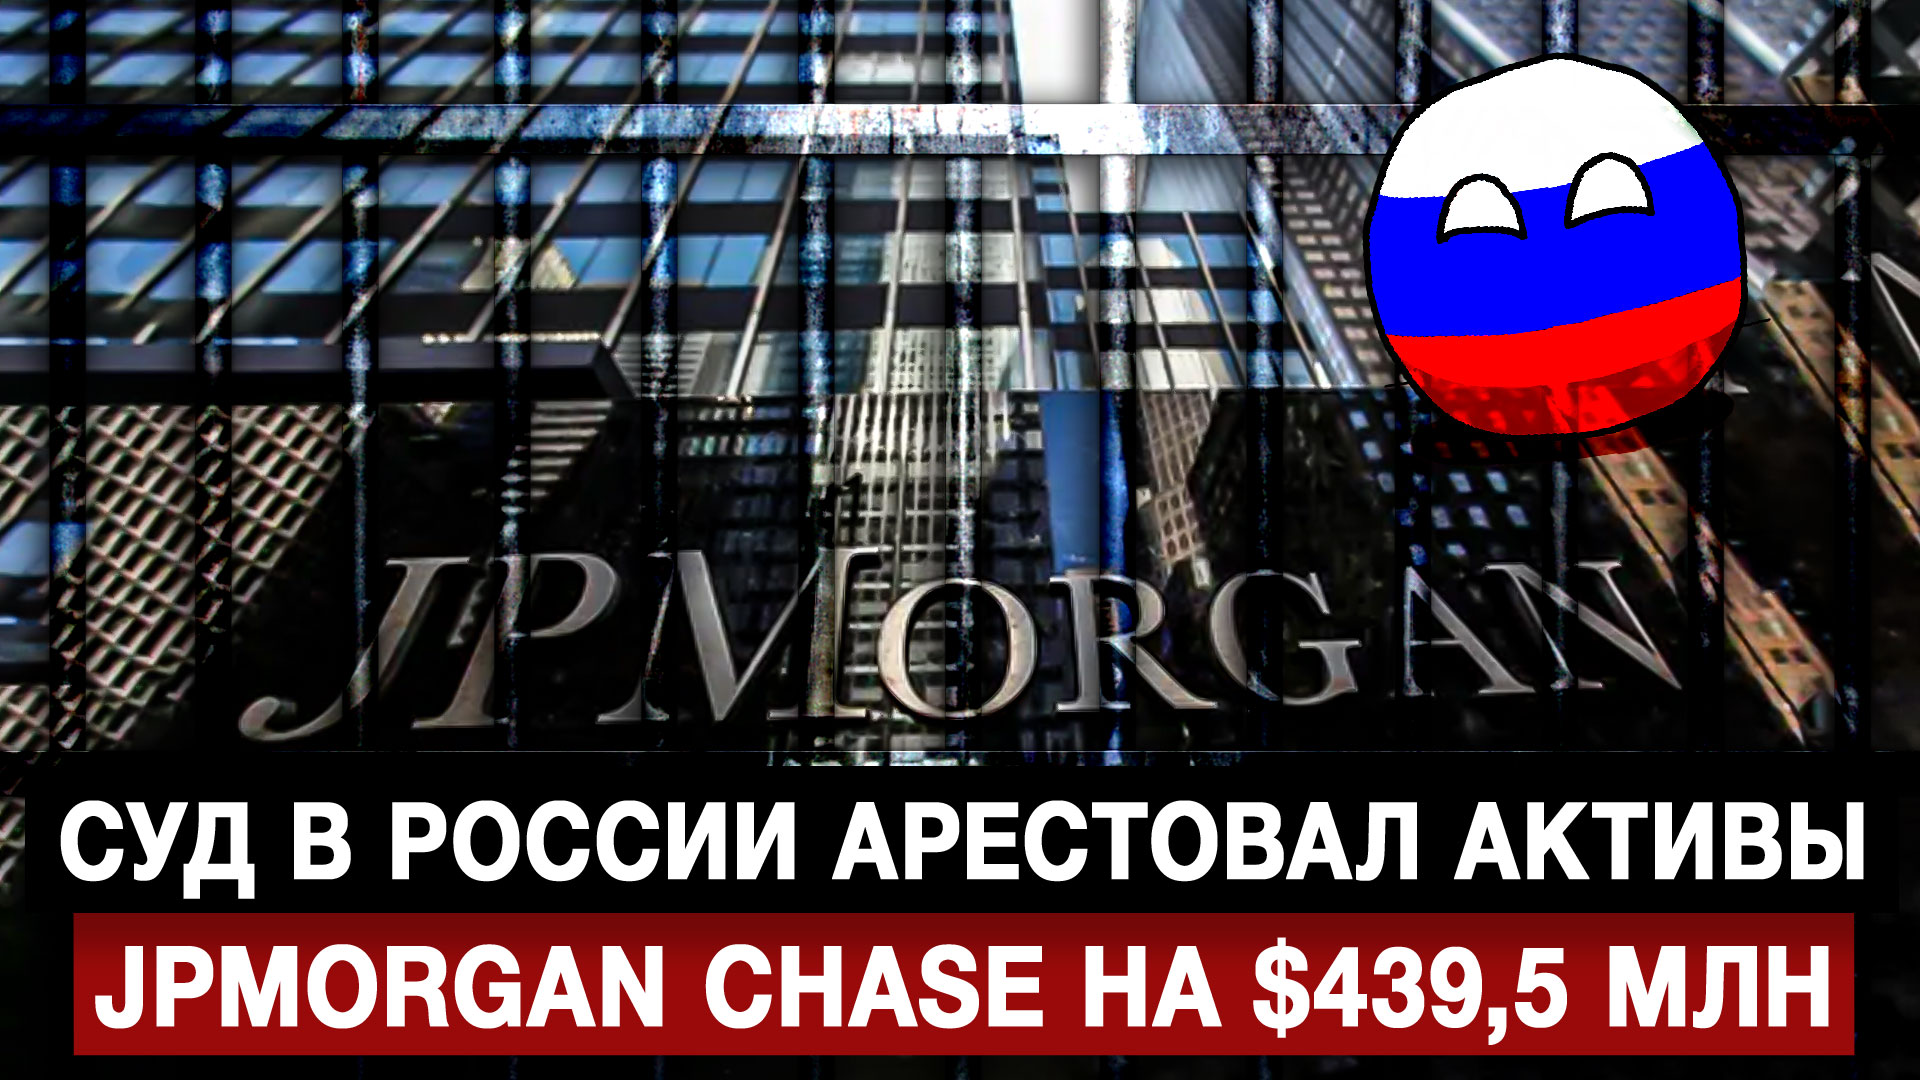 Суд в России арестовал активы JPMorgan Chase на $439,5 млн